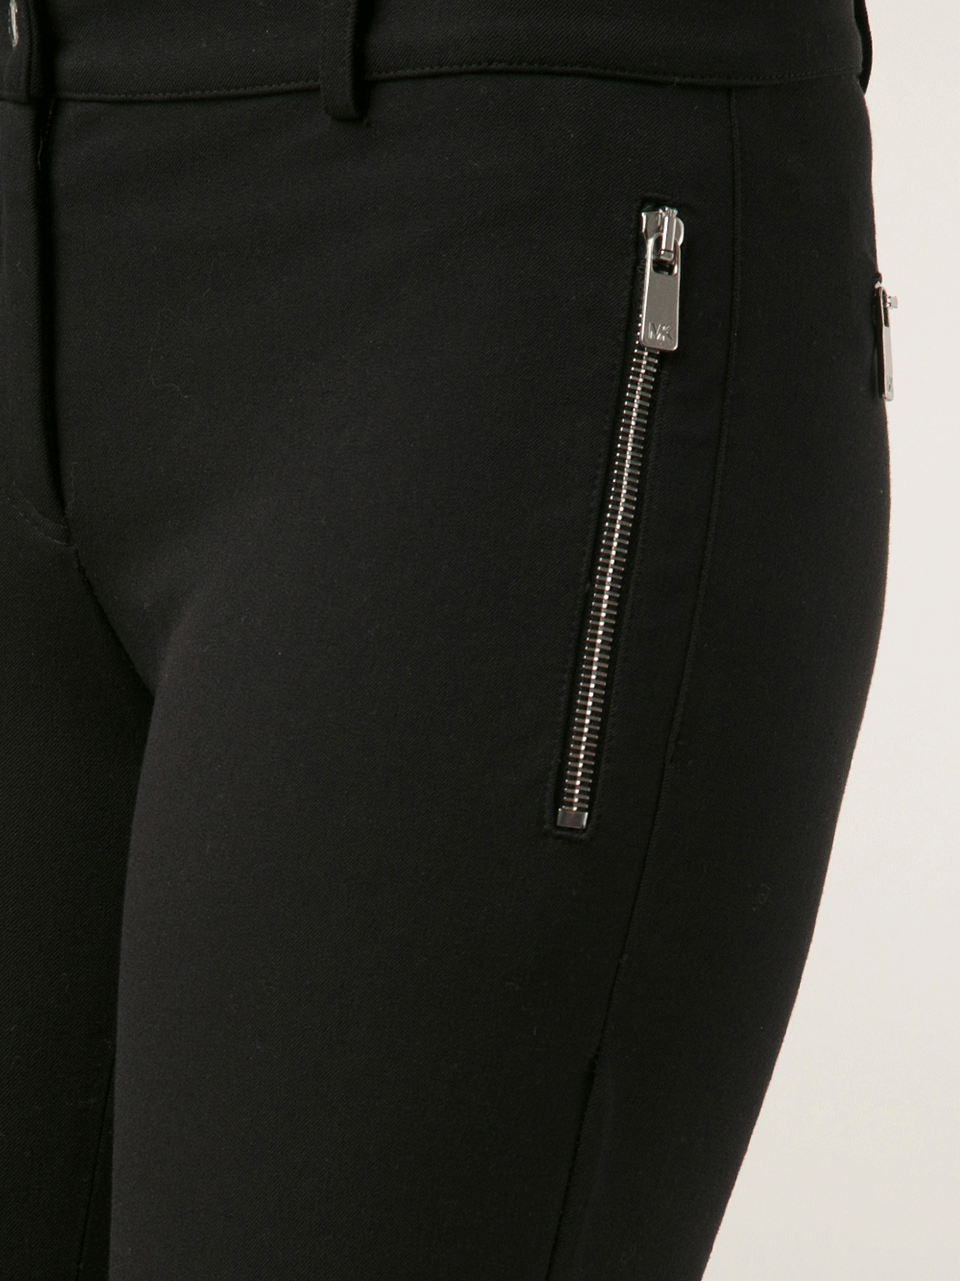 MICHAEL KORS-Skinny Zip Pocket Pants-